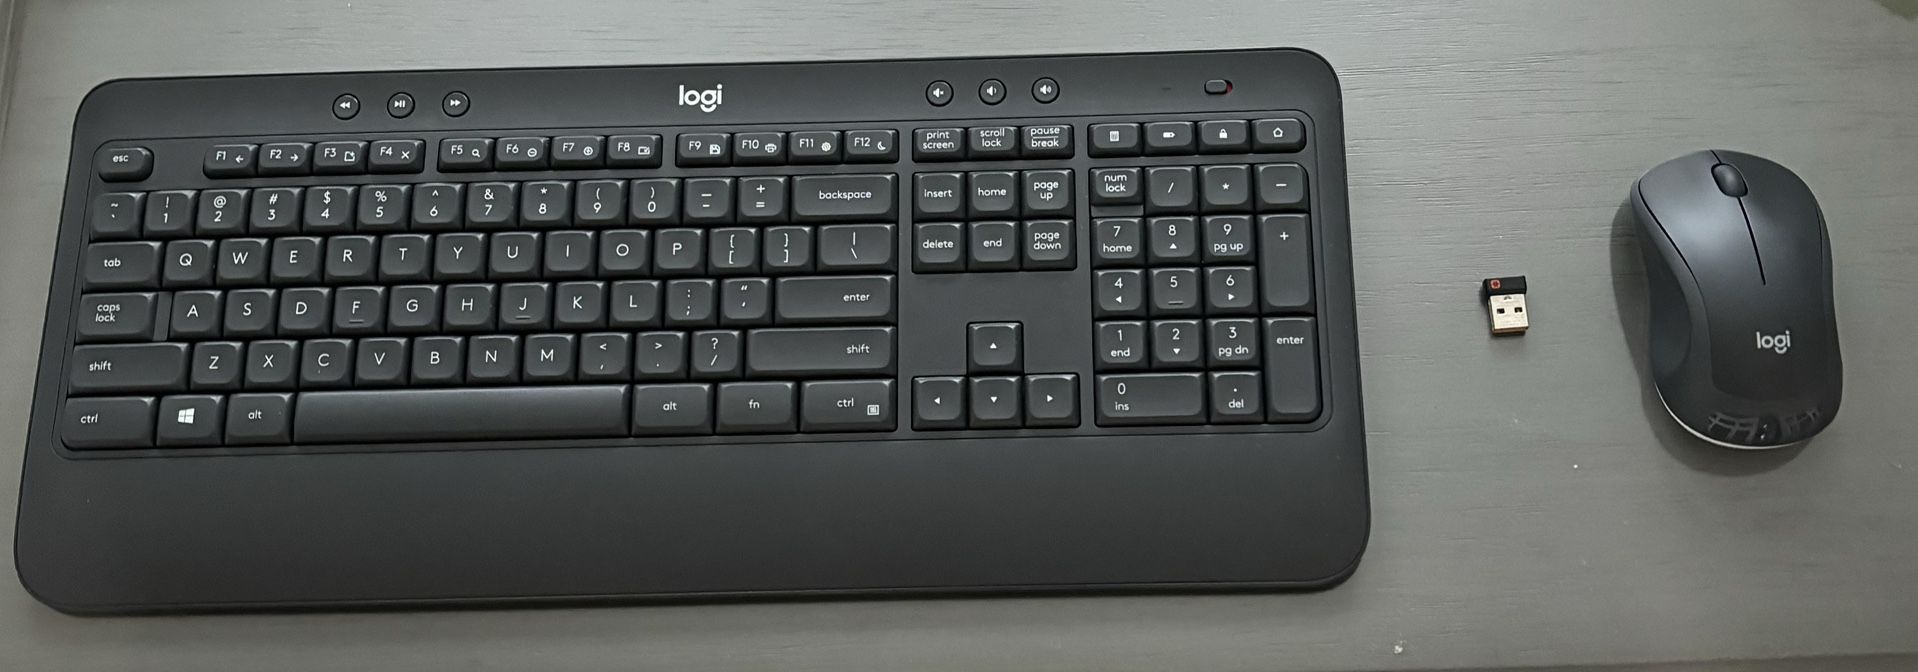 Black Logitech MK540 Advanced Wireless Keyboard And Mouse 